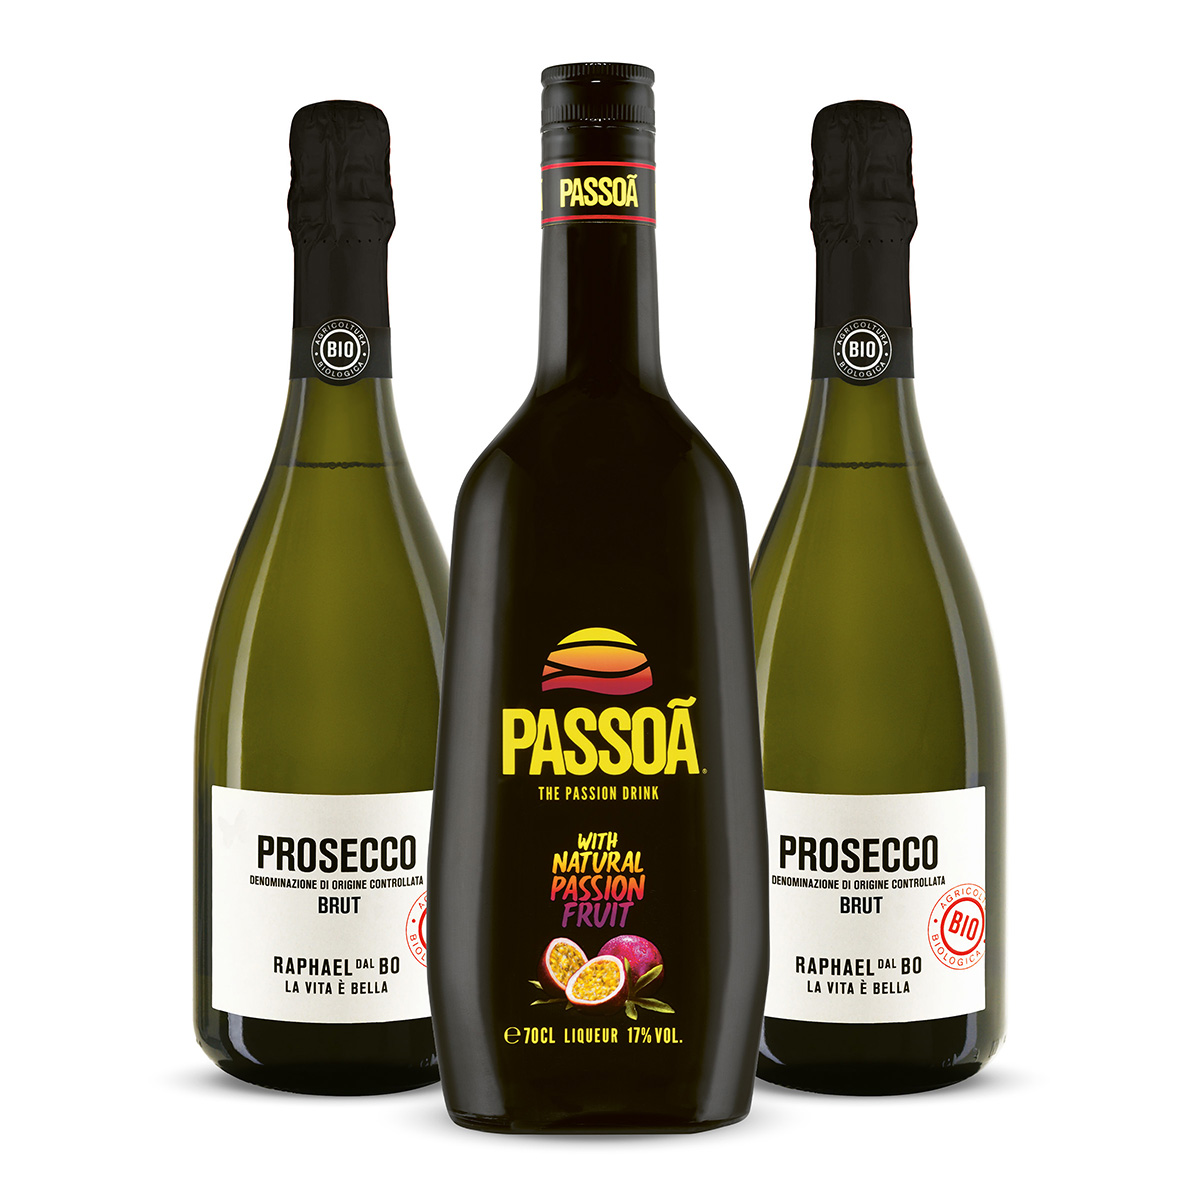 Passoa Spritz Kit | Passoa Passion mit Prosecco